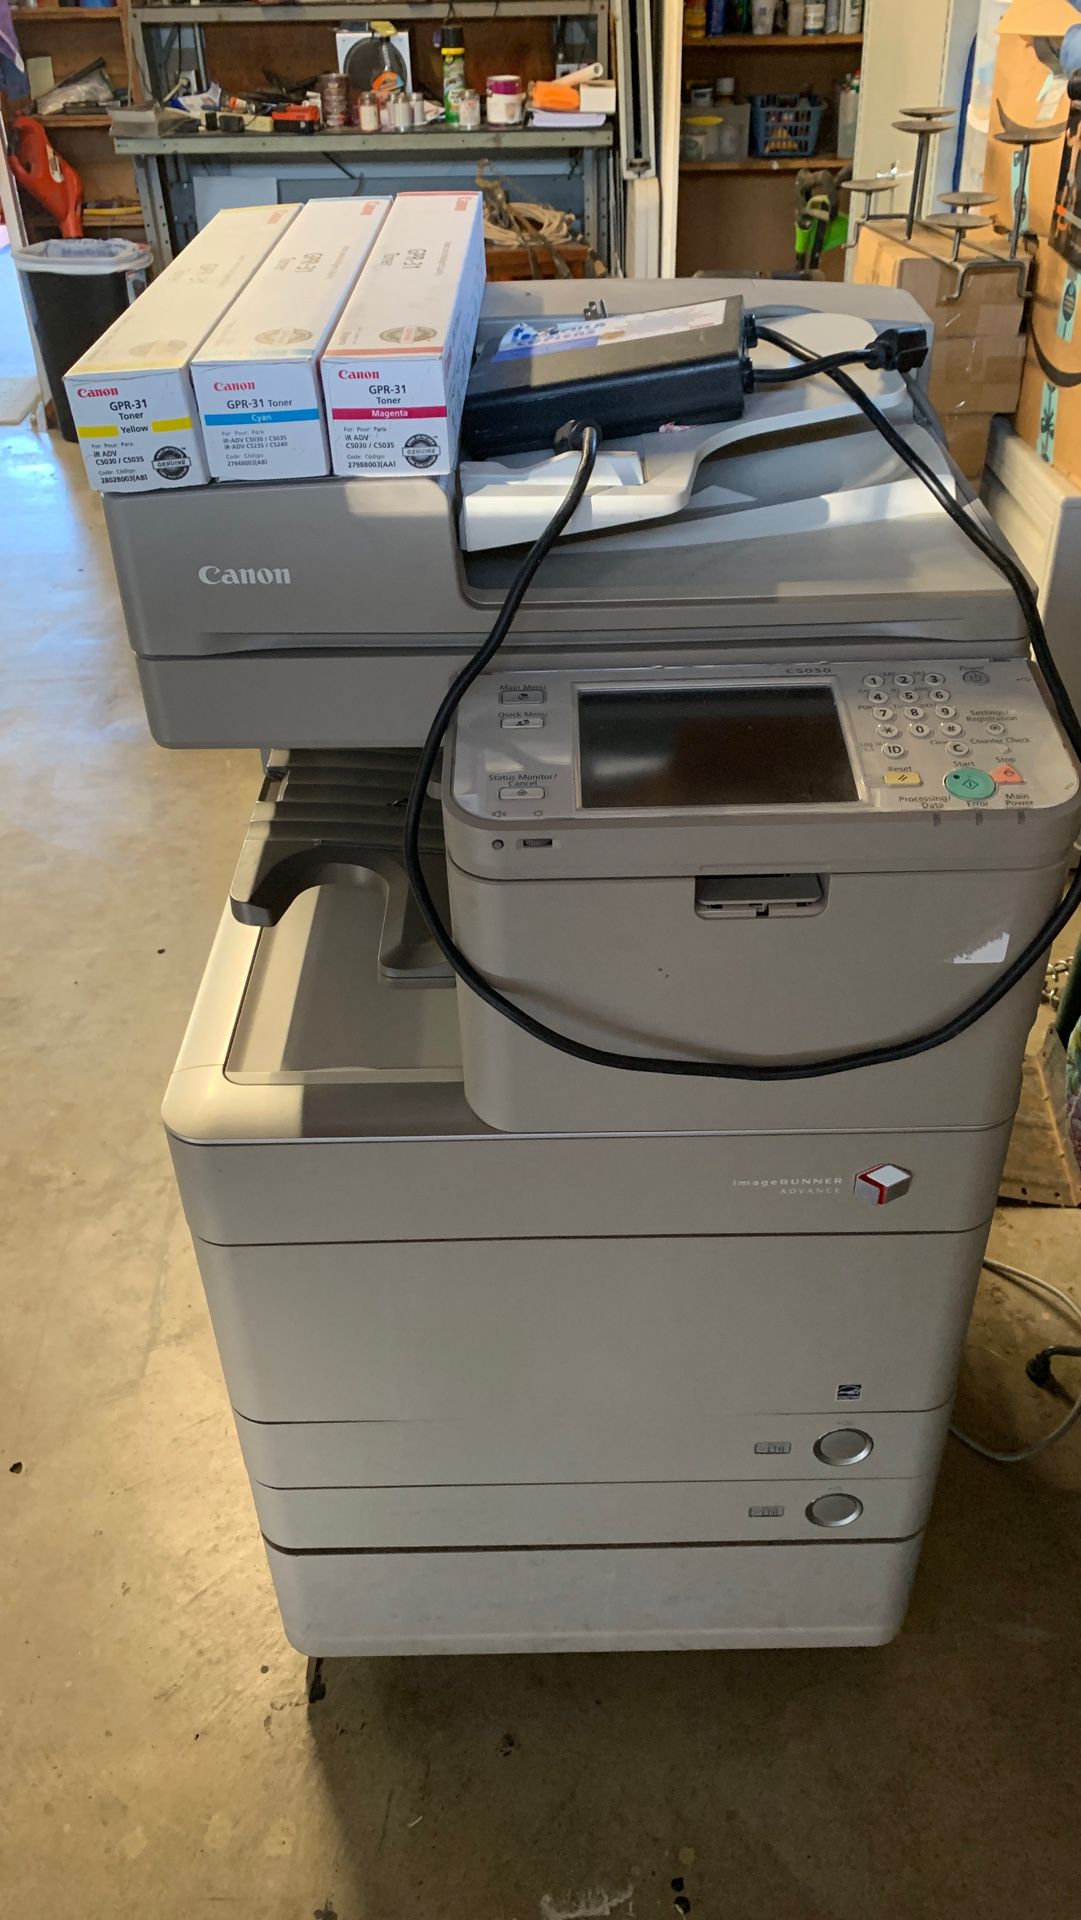 Printer, copier and scanner